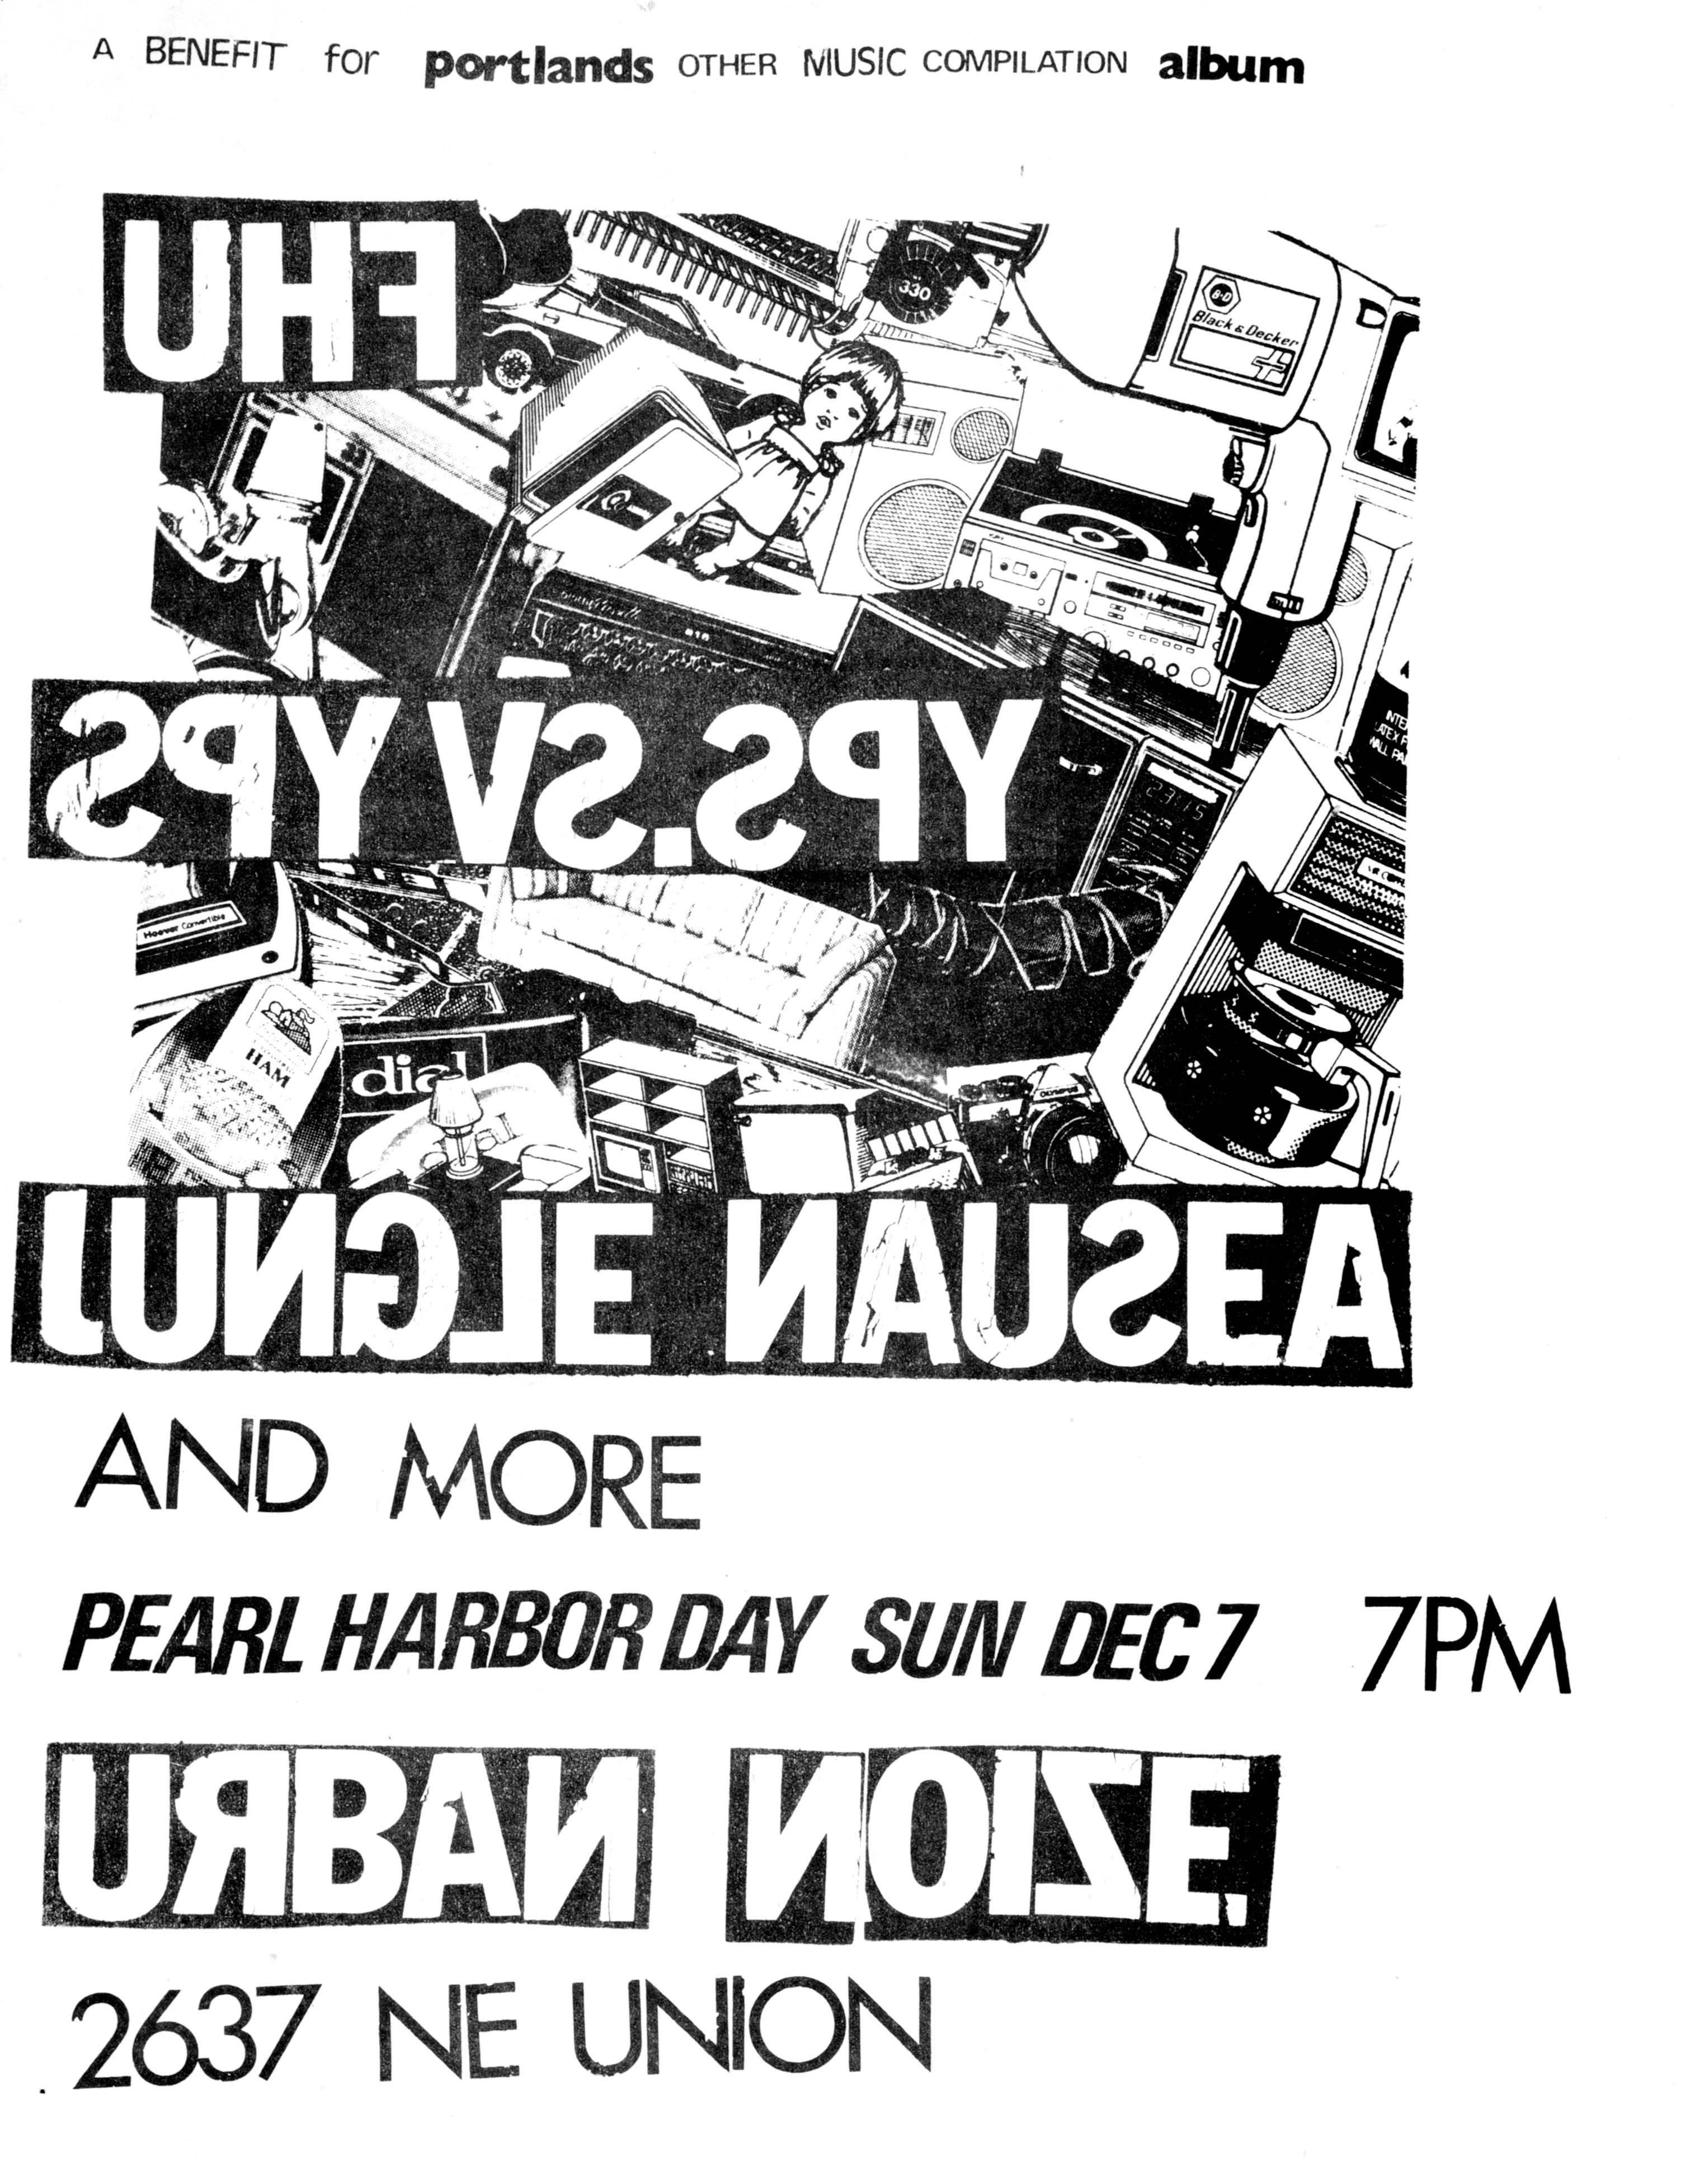 MXP-45.6 UHF 1980 Urban Noize Concert Poster